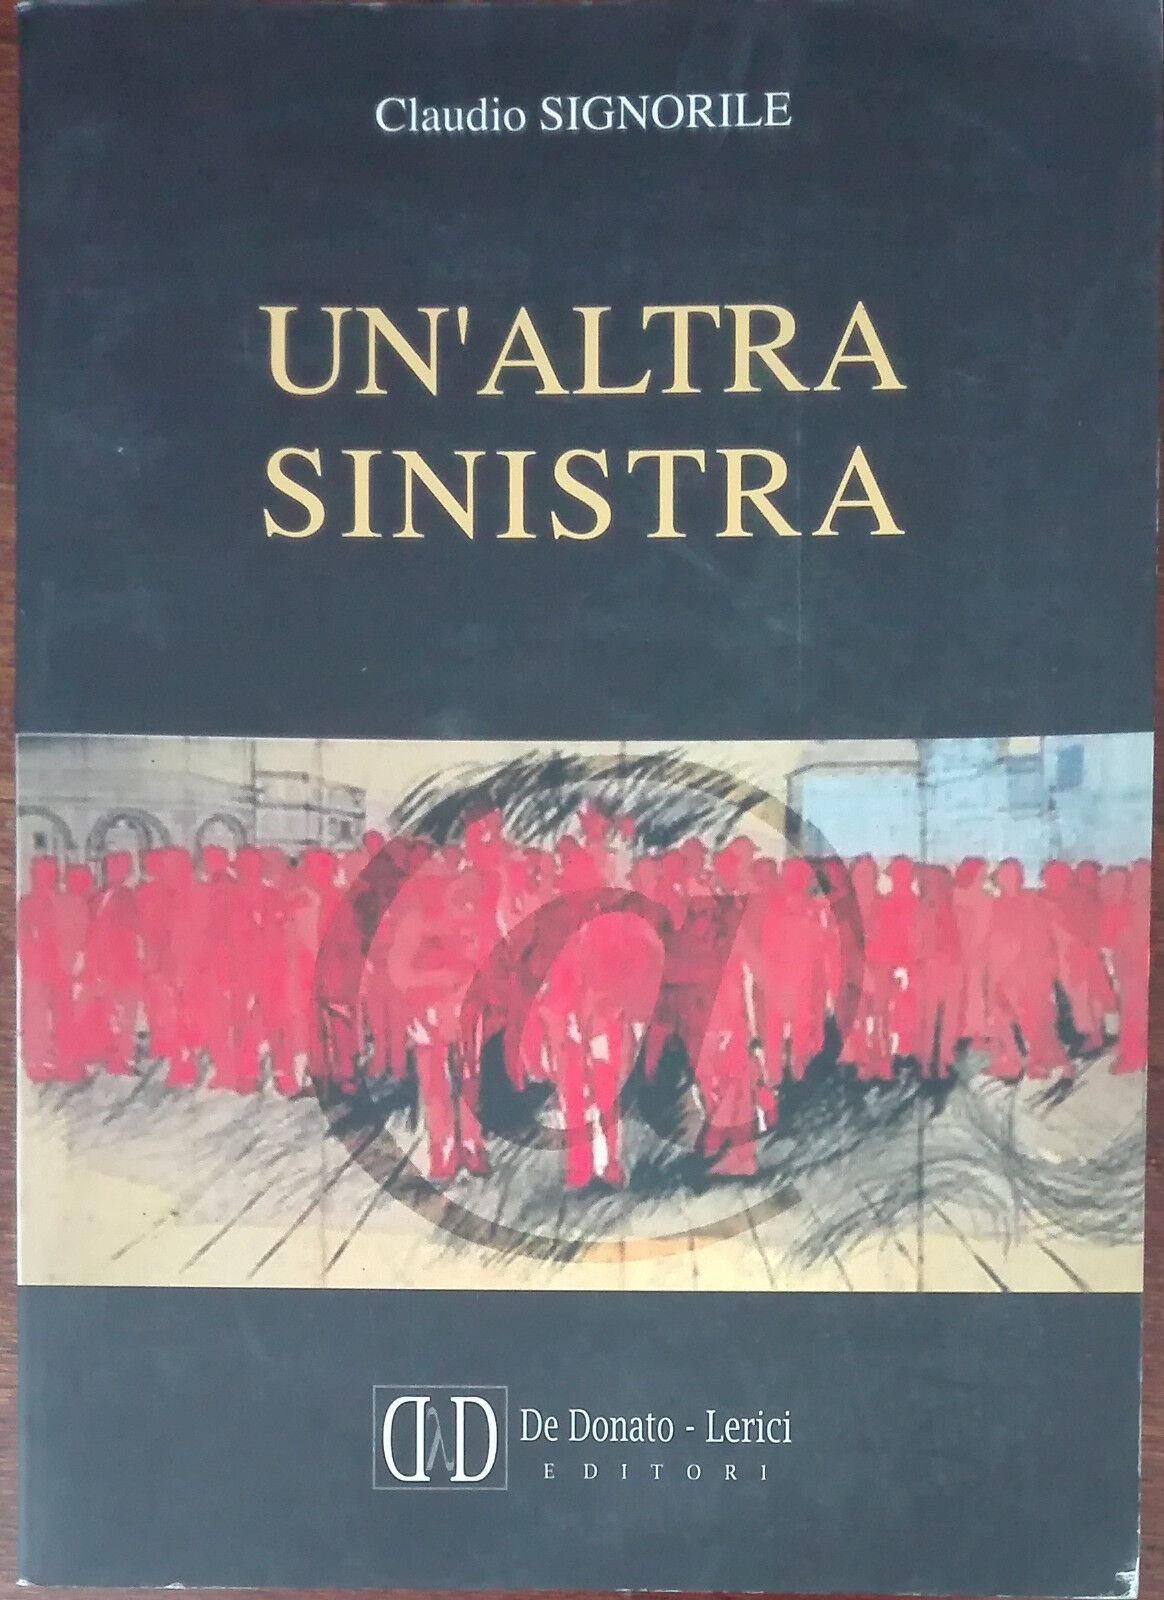 Un'altra sinistra - Claudio Signorile - De Donato - Lerici, 2000 - A 